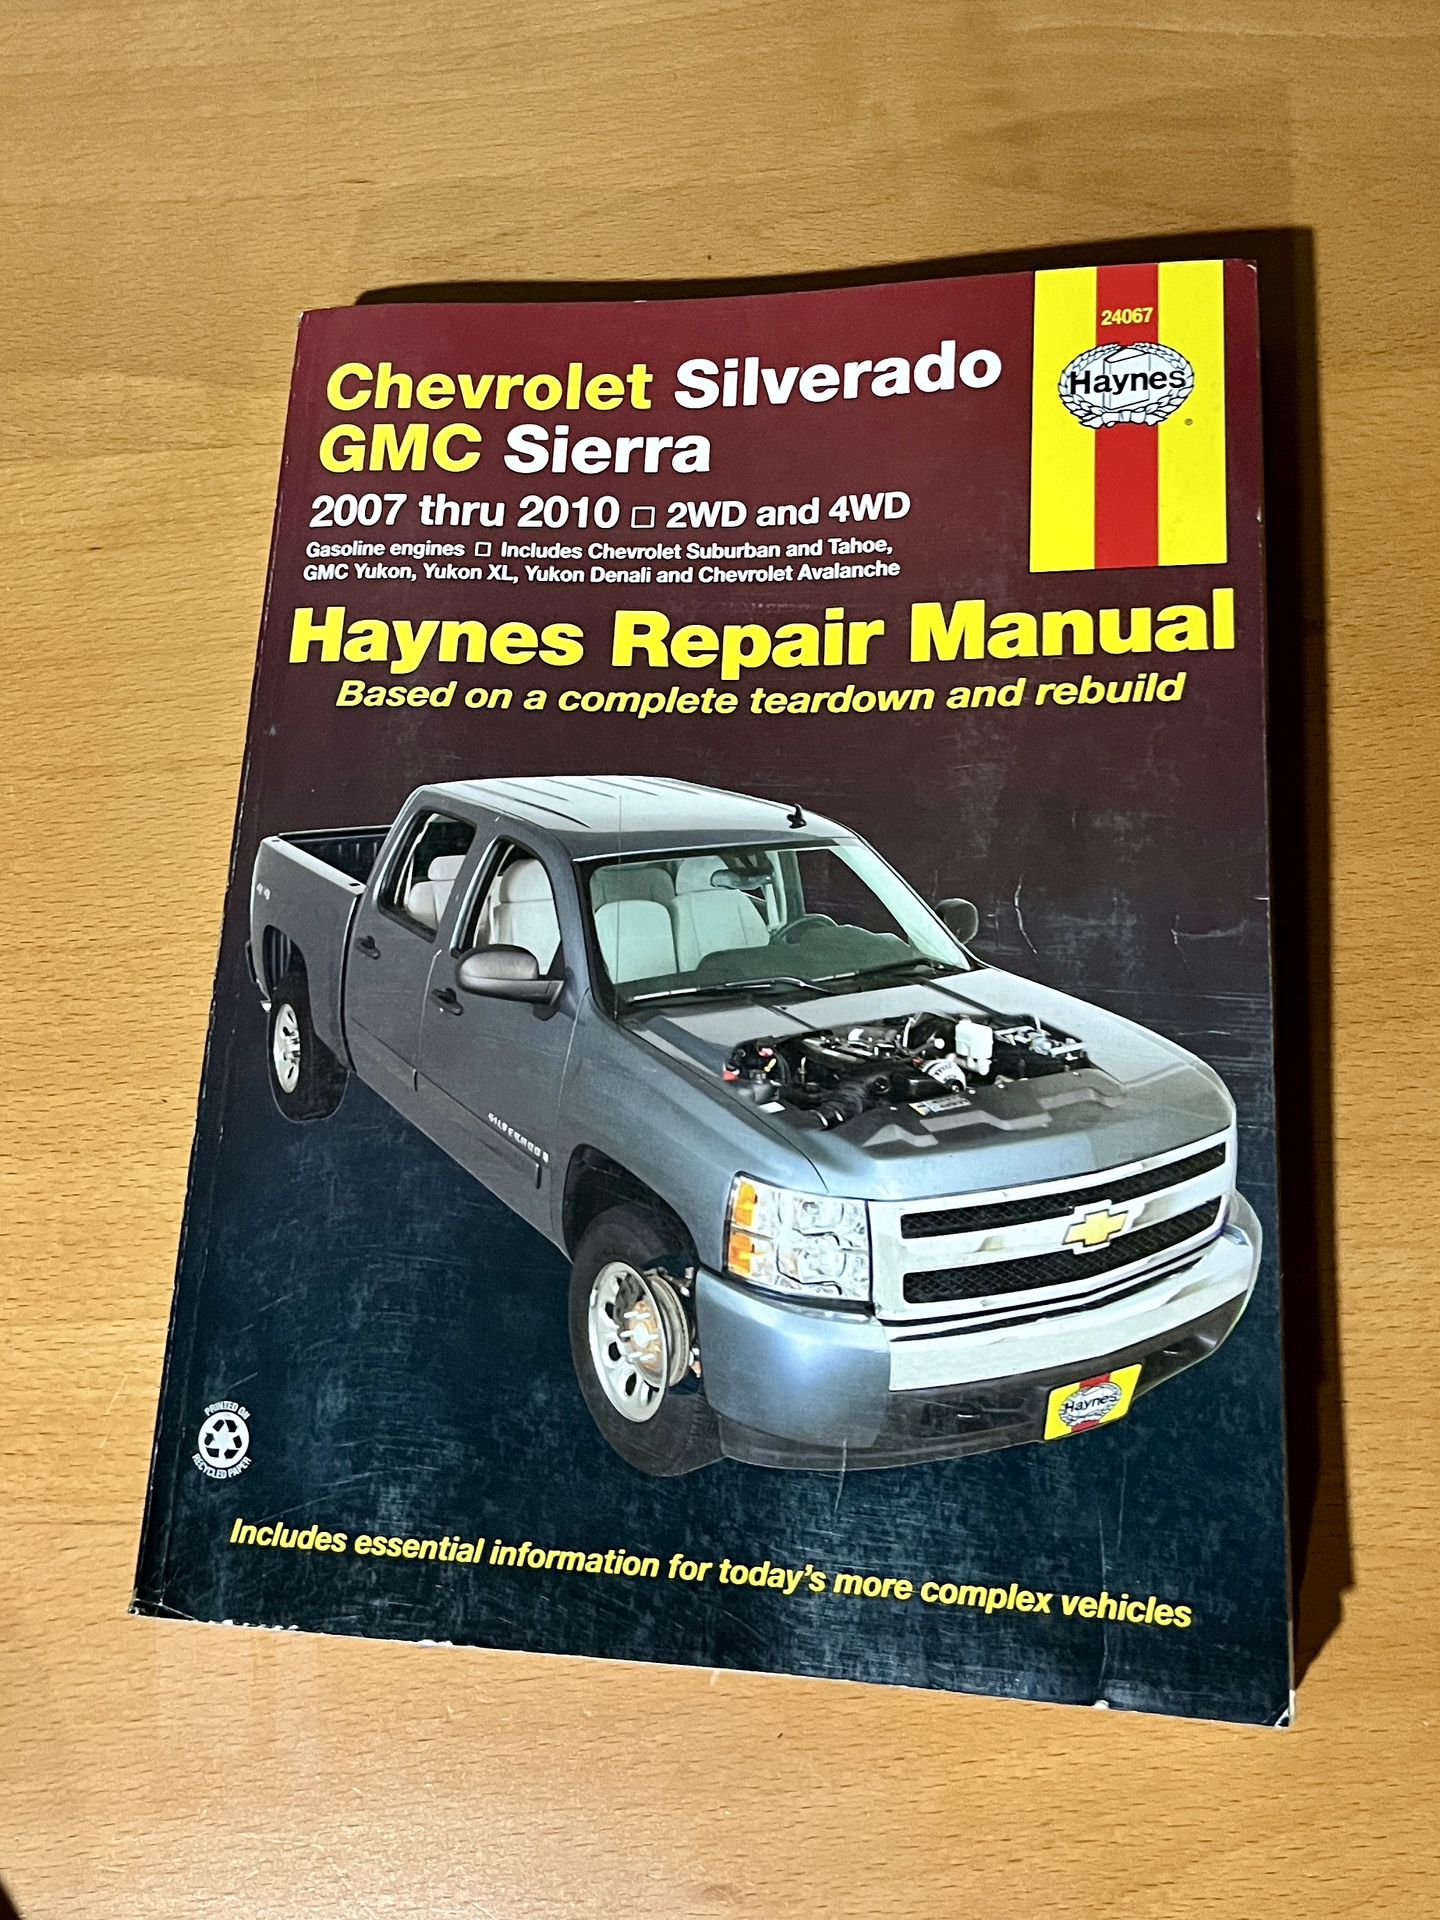 Haynes Repair Manual Chevy Silverado & GMC Sierra Repair(2007-2014)